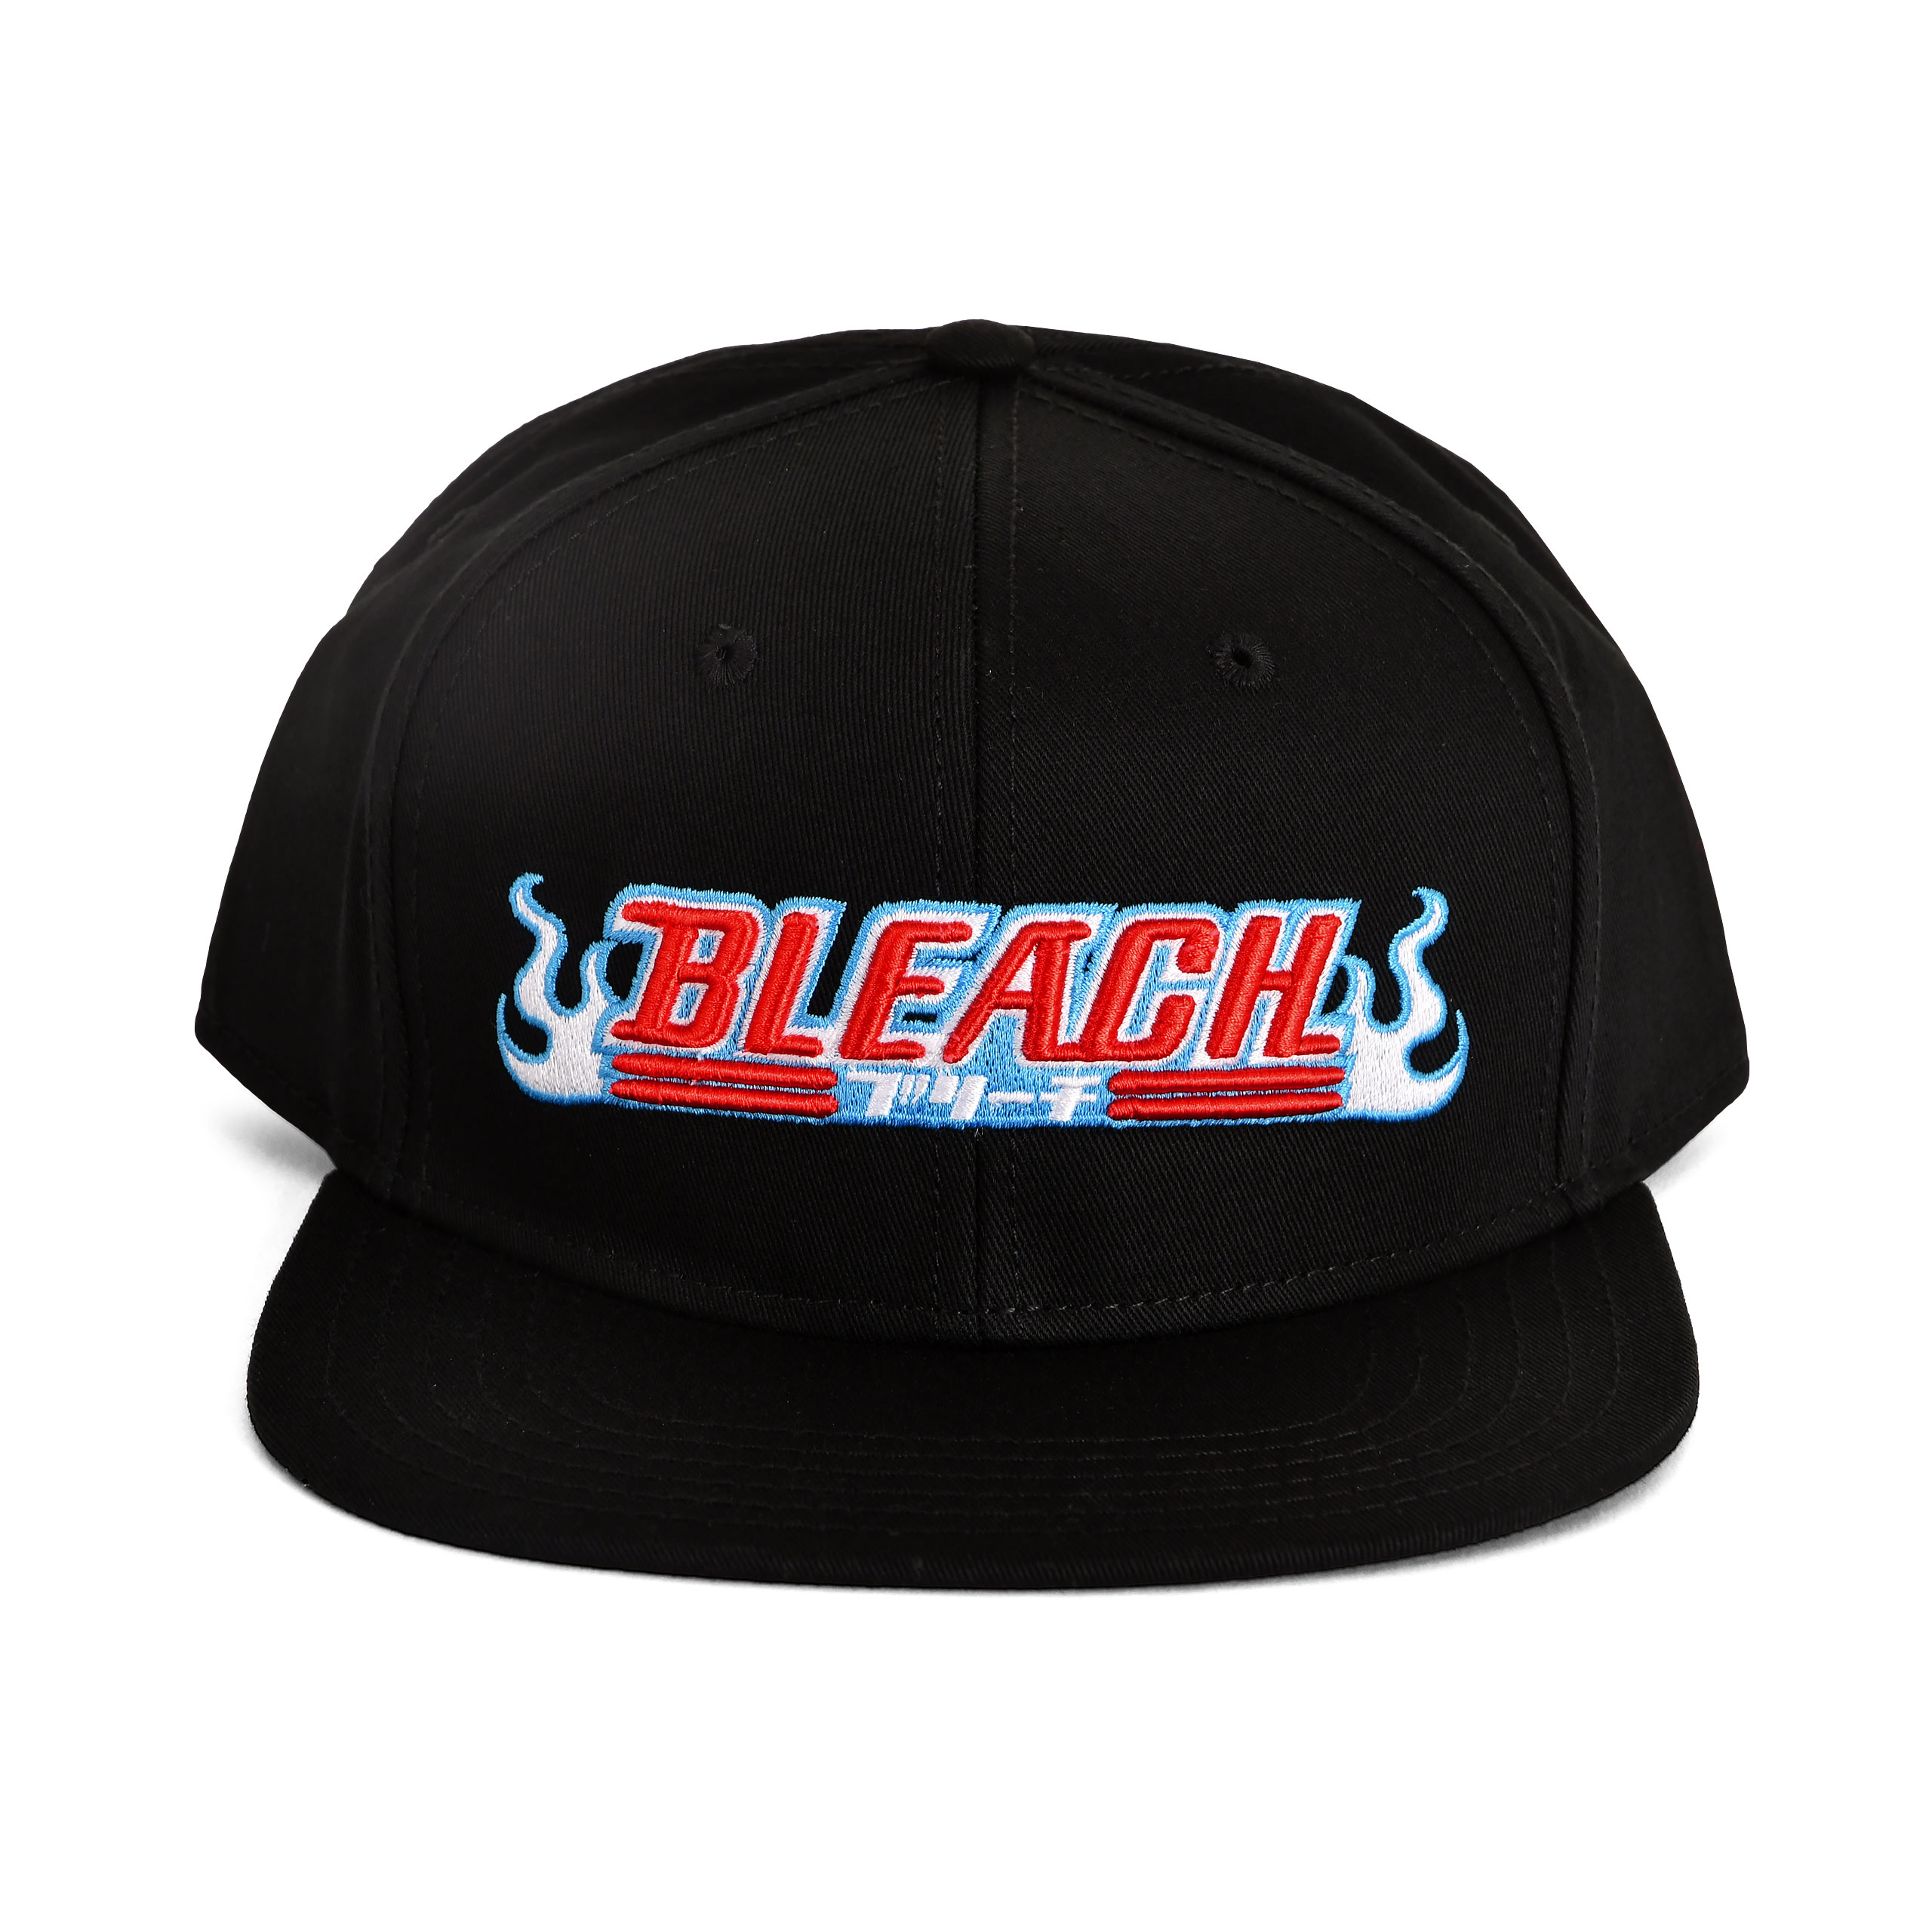 Bleach - Logo Snapback Cap Black